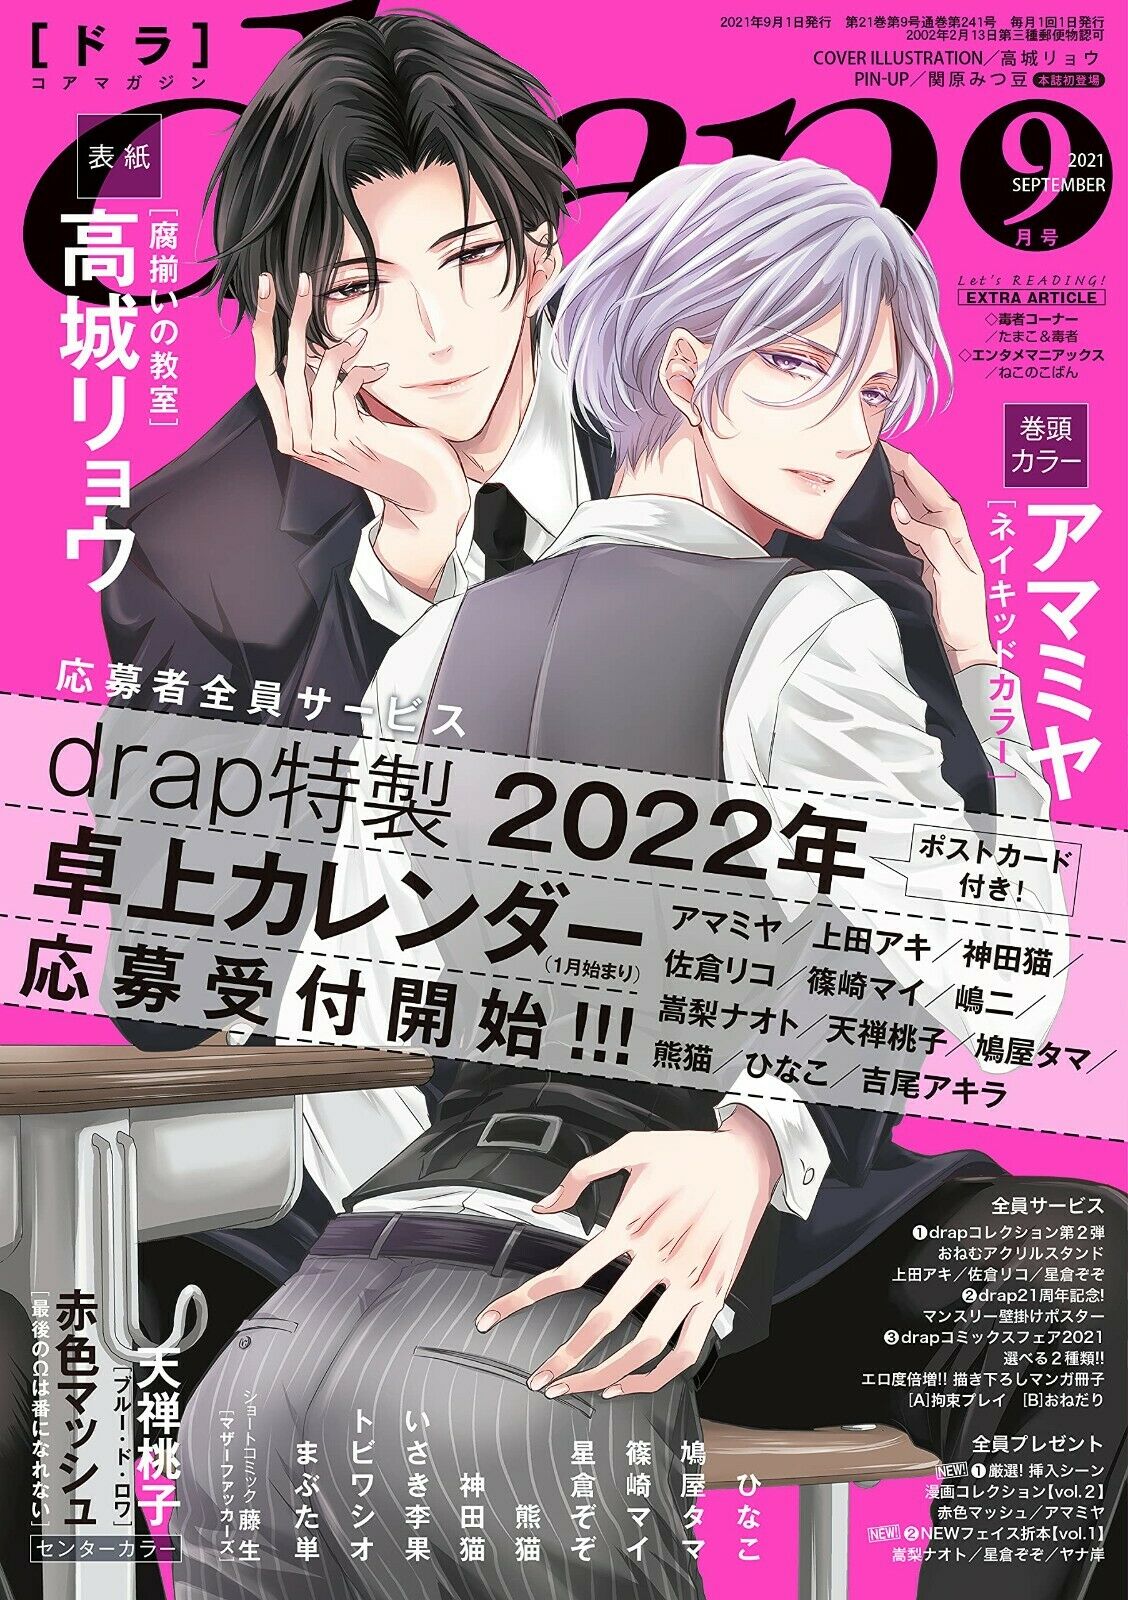 "new" Drap September 2021 | Japanese Yaoi Manga Magazine Bl Comic  Boys Love